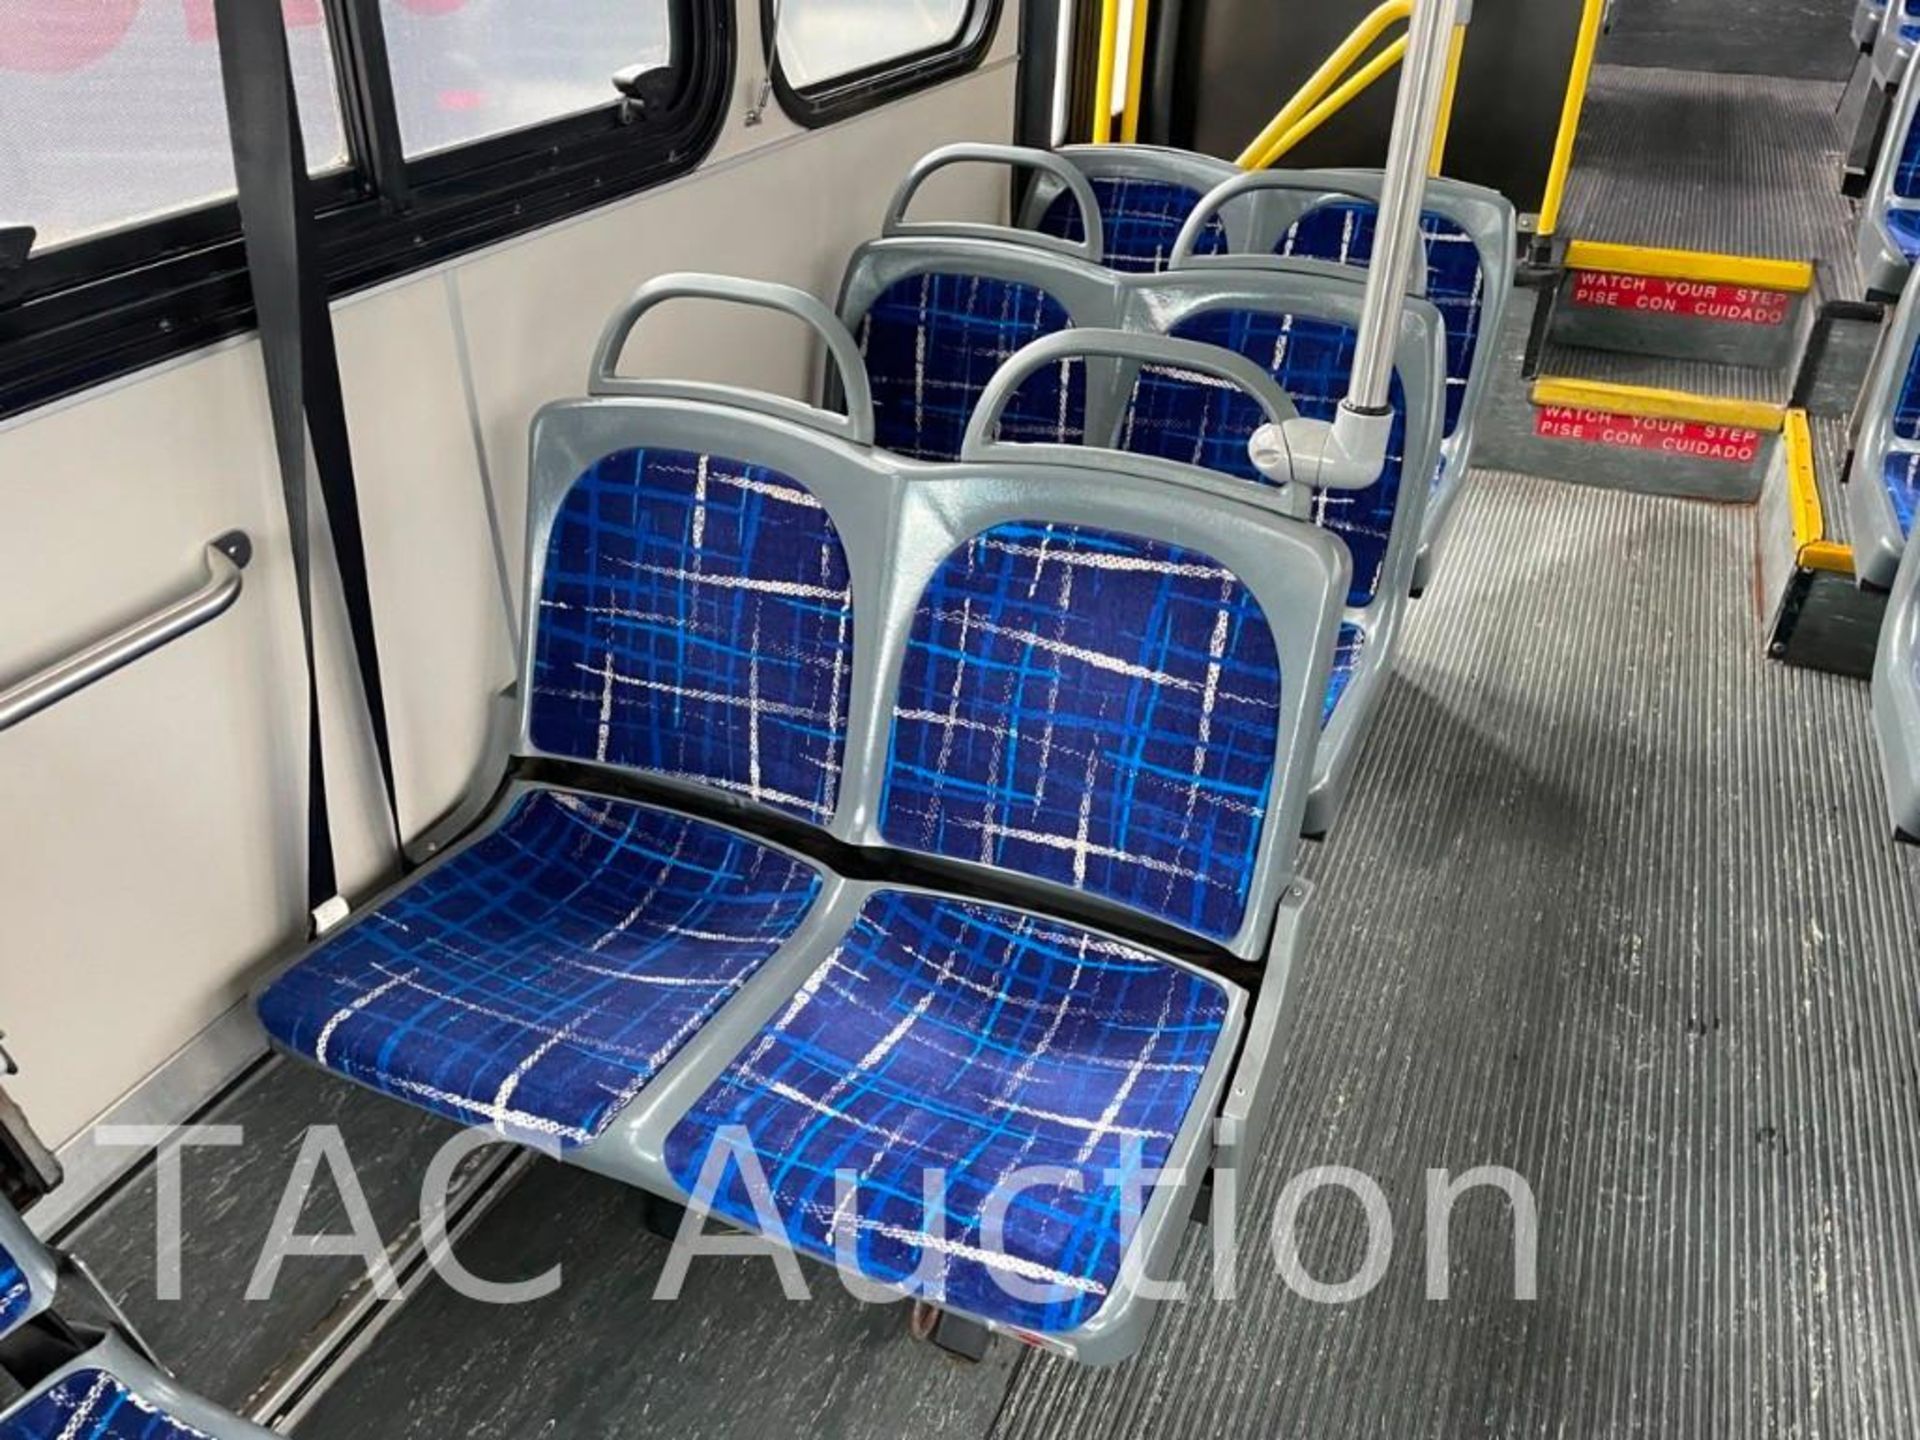 2005 Gillig Low Floor (40) Passenger Coach Transit Bus - Image 54 of 91